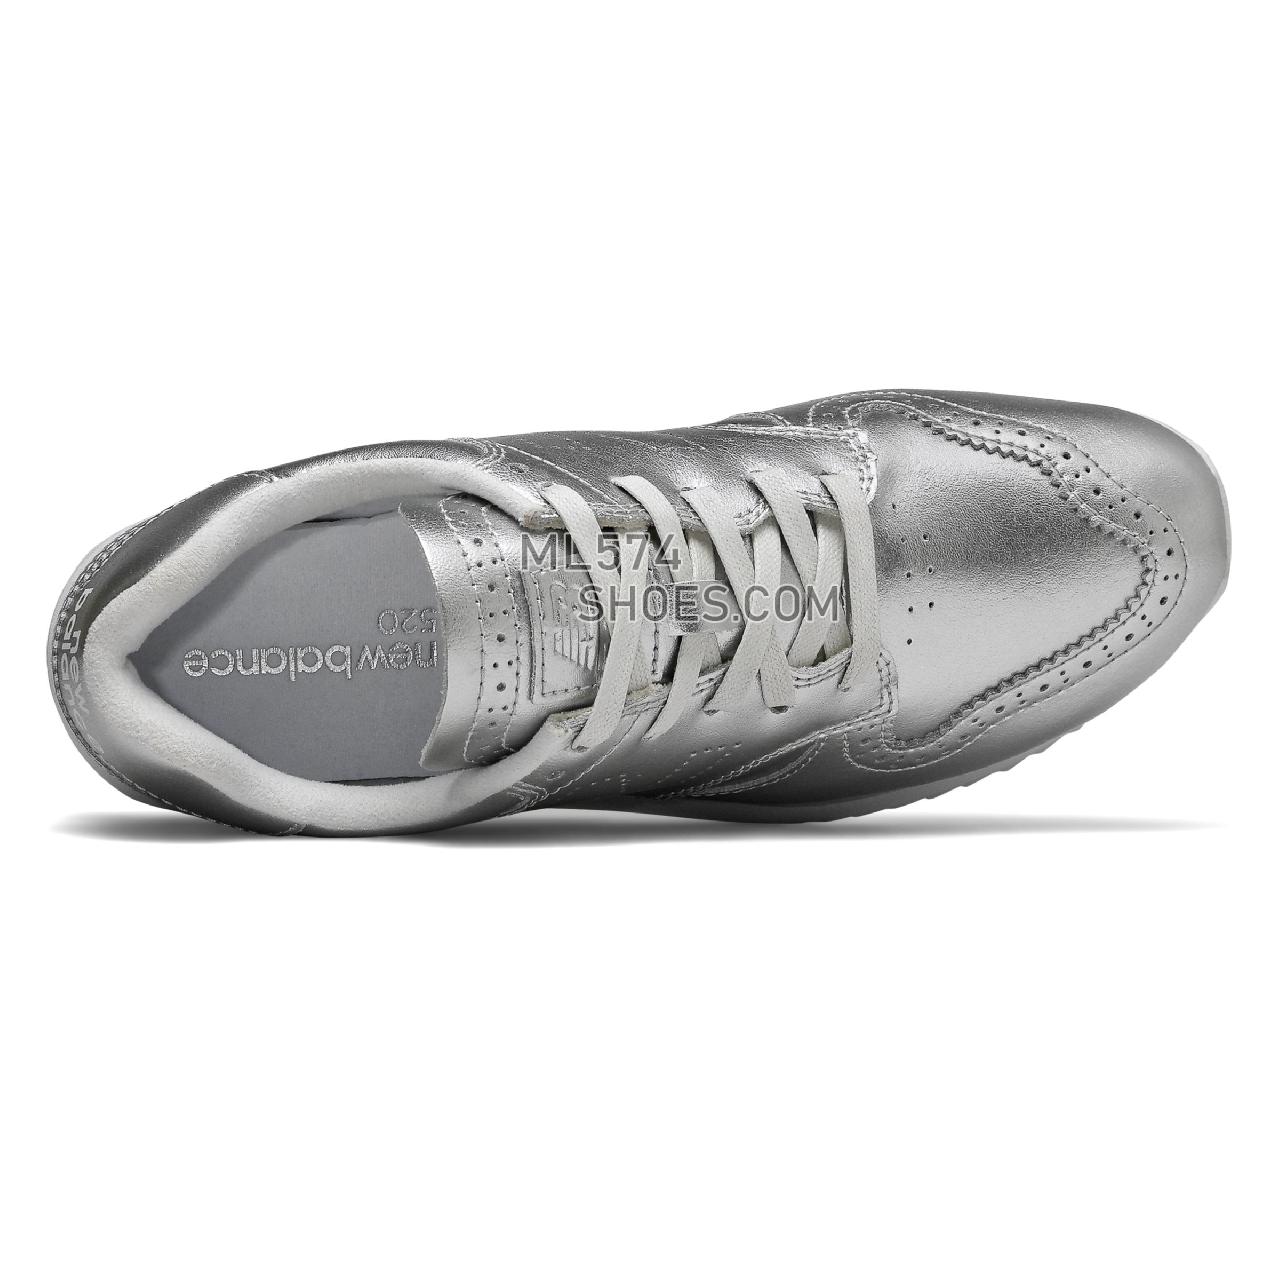 New Balance 520 Platform - Women's 520 - Classic Metallic Silver with Arctic Fox - WL520ME